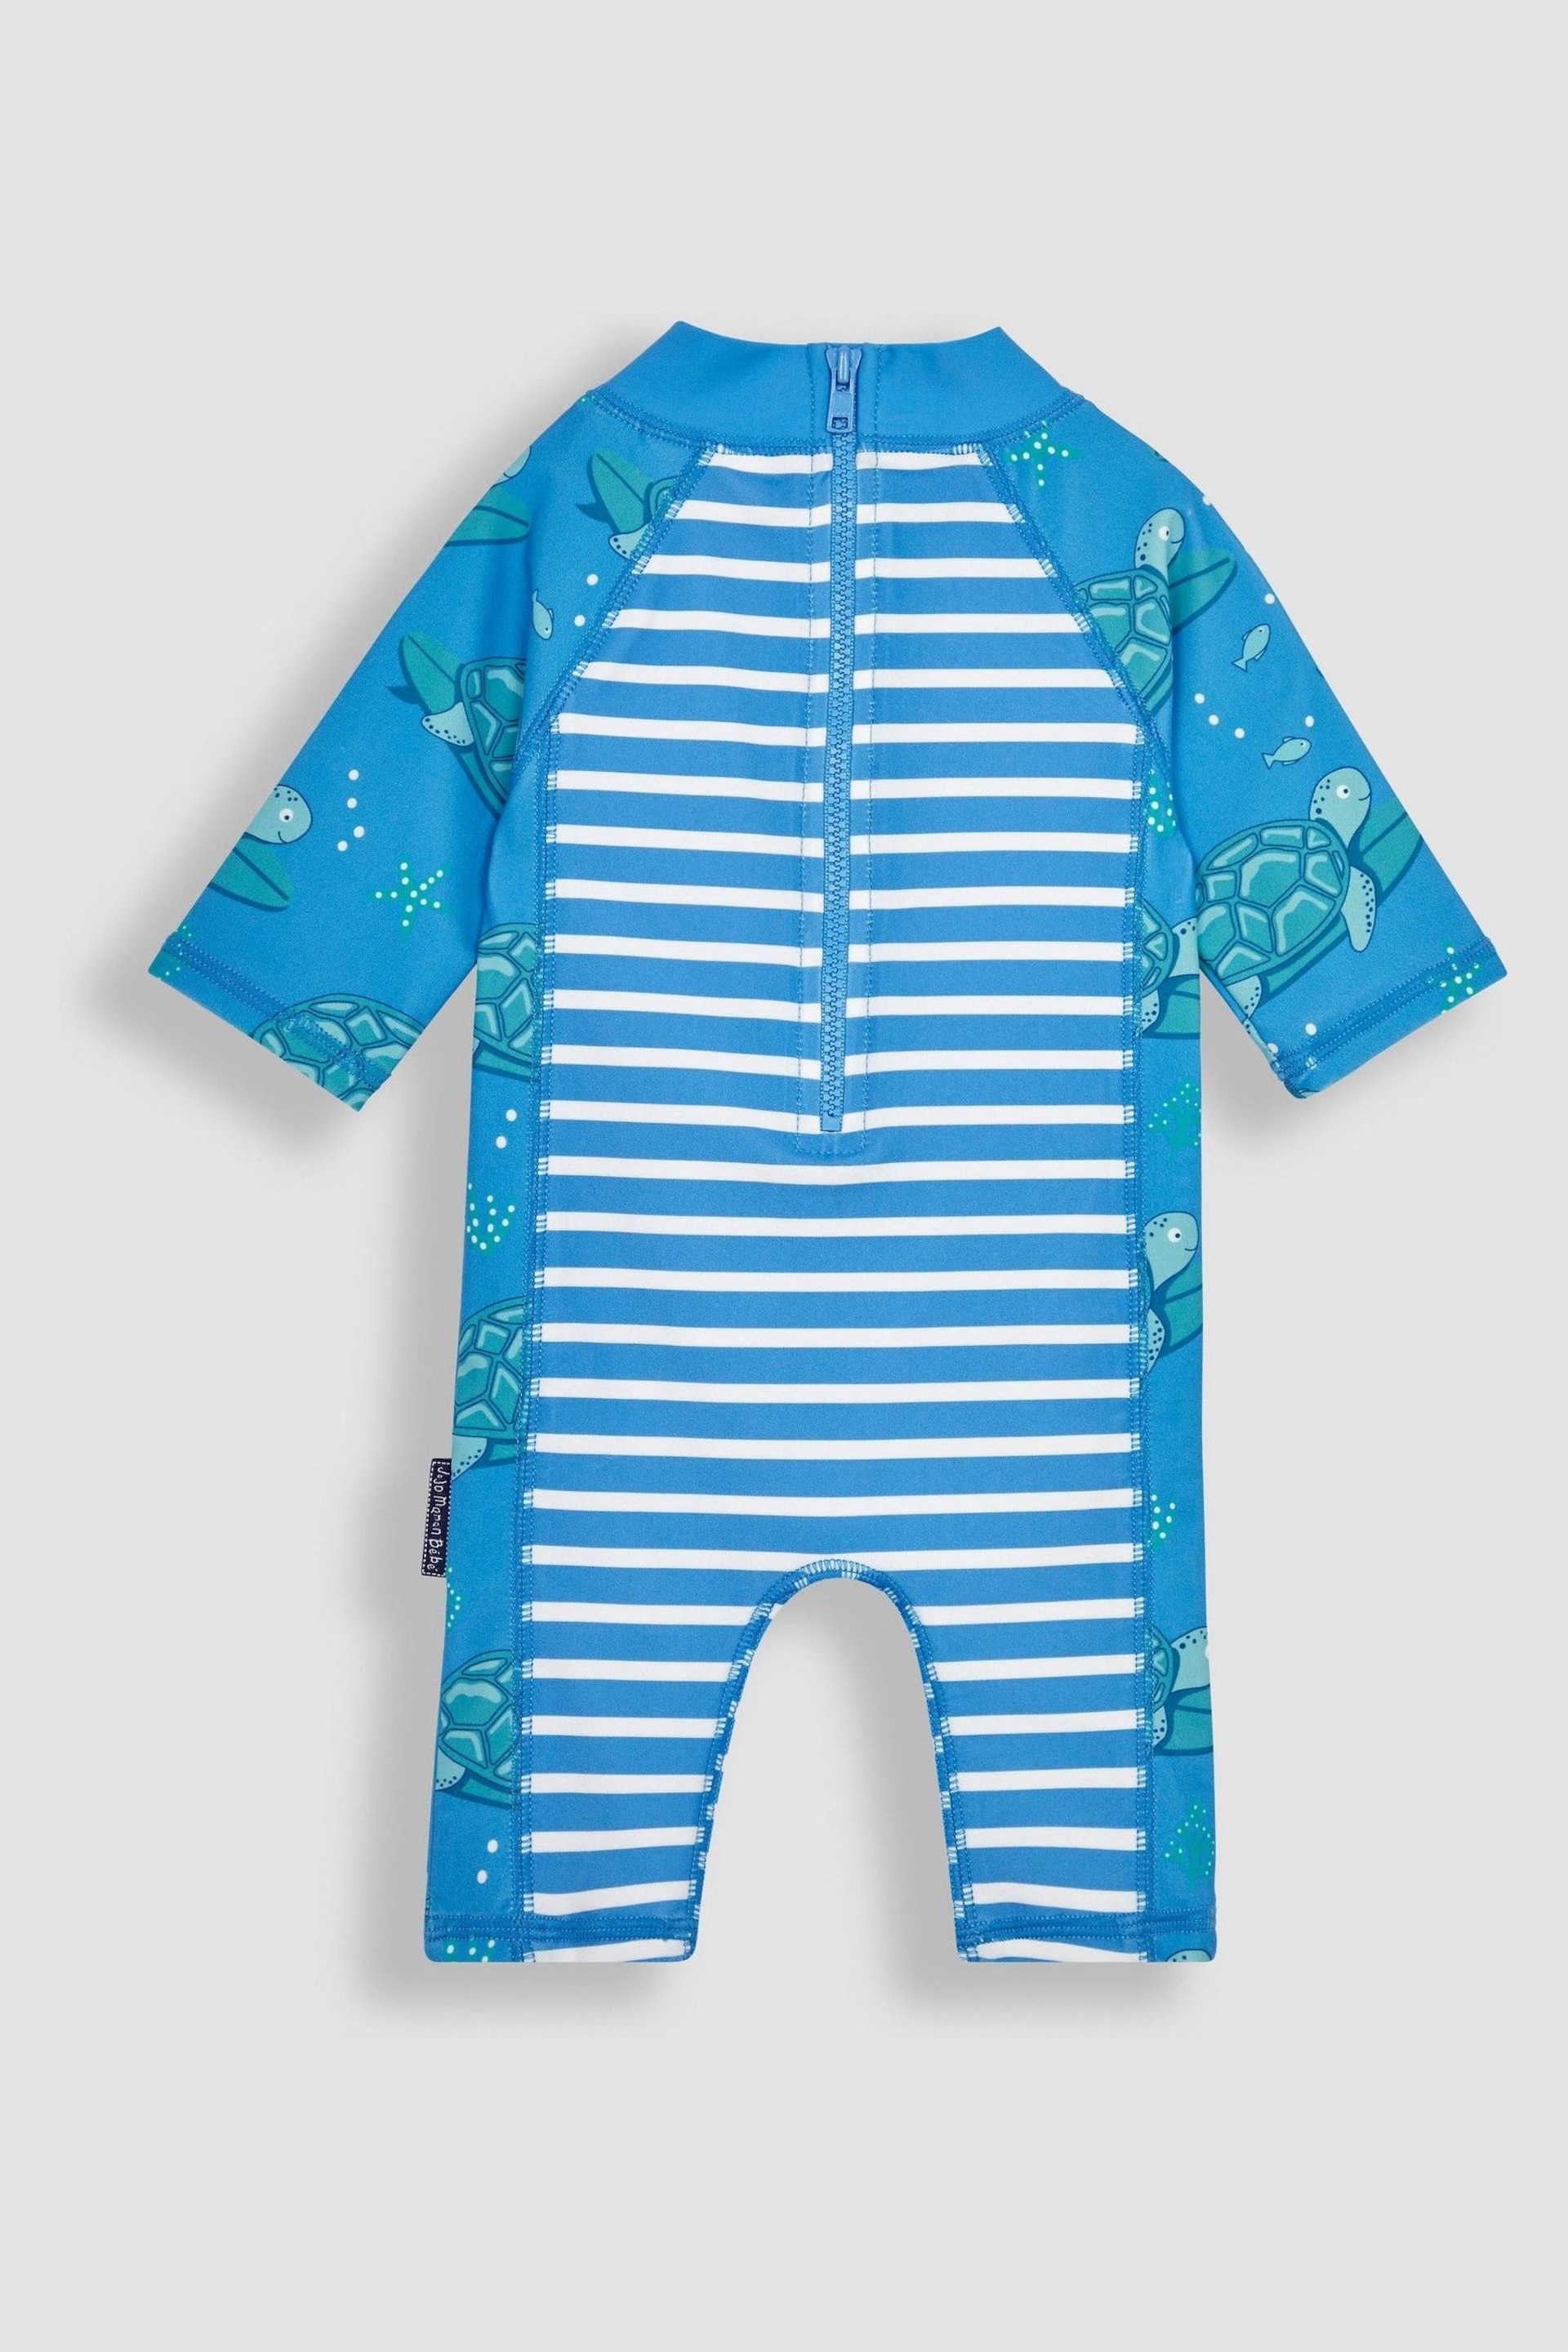 JoJo Maman Bébé Aqua Blue UPF 50 1-Piece Sun Protection Suit - Image 2 of 3